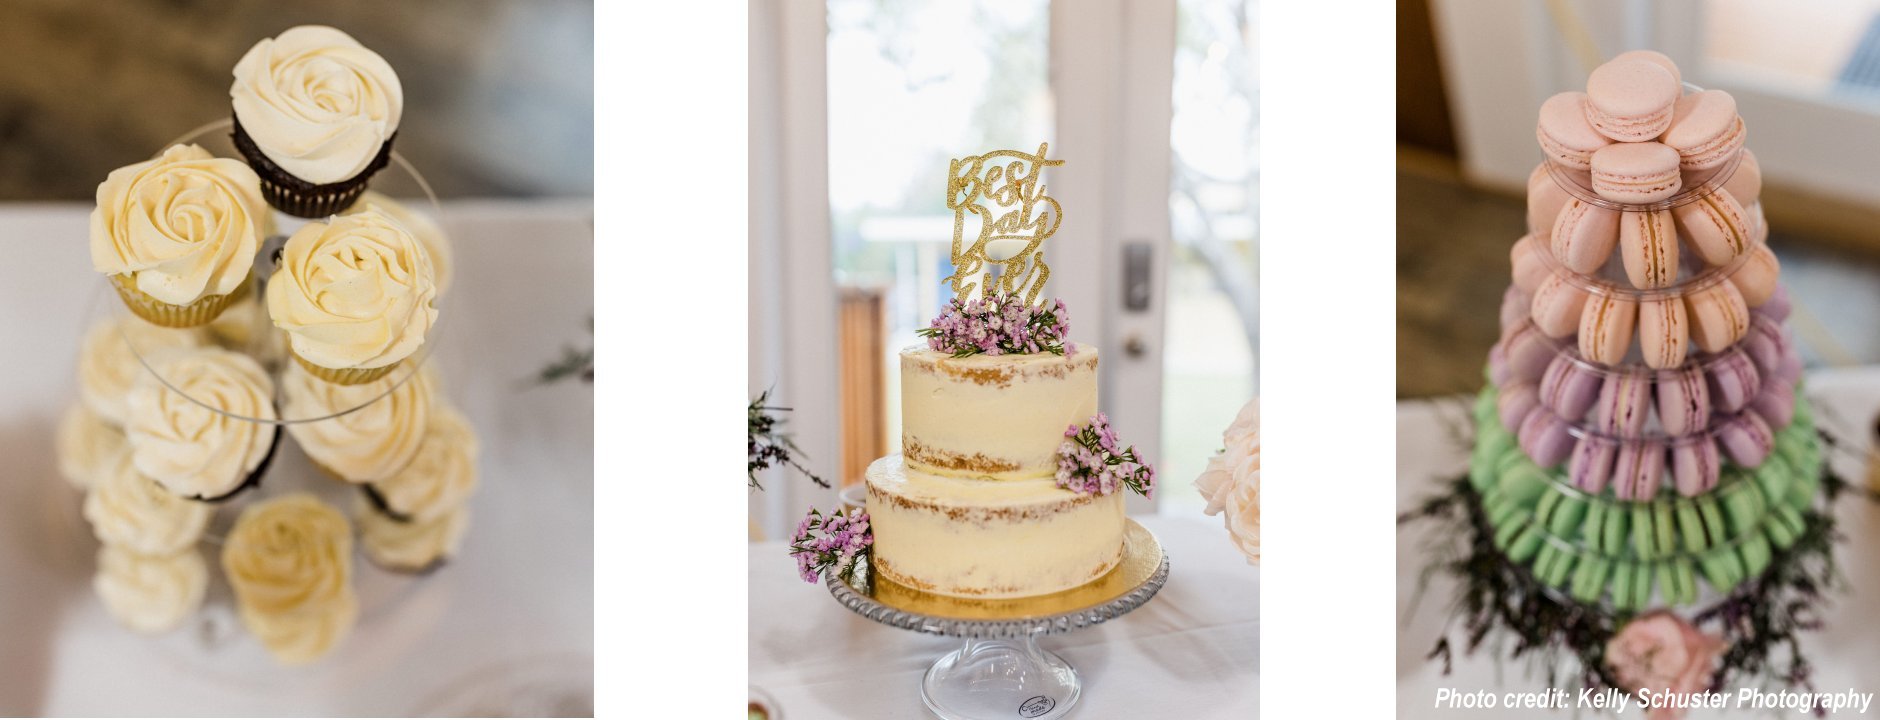 Wedding Cakes and Macarons Towers